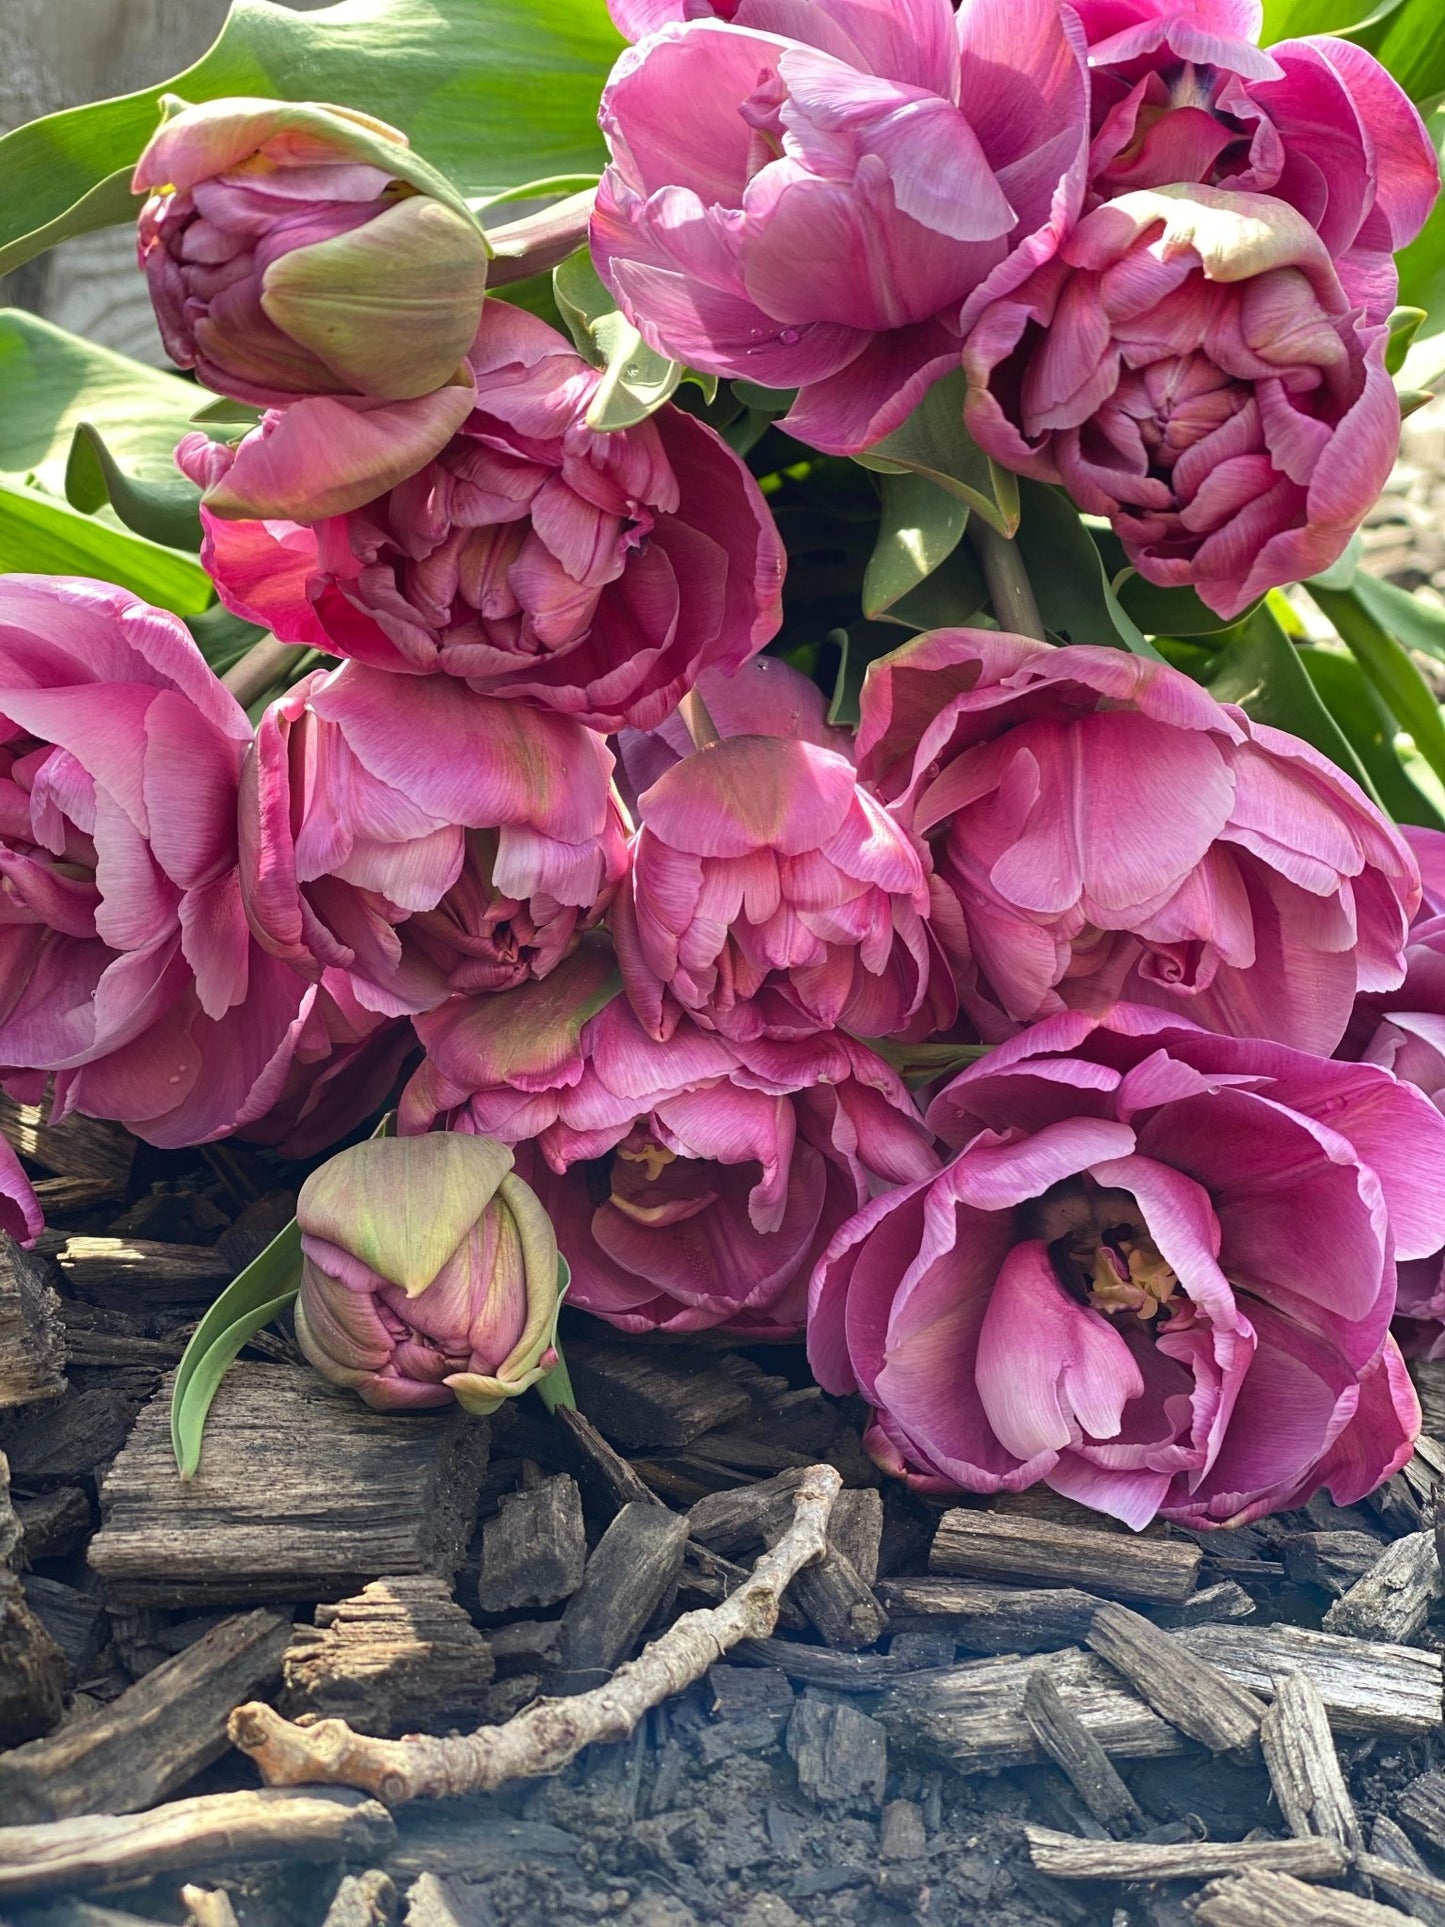 Verse vollegrond tulpen uit Lennik - Tuinkabouter Chrisje